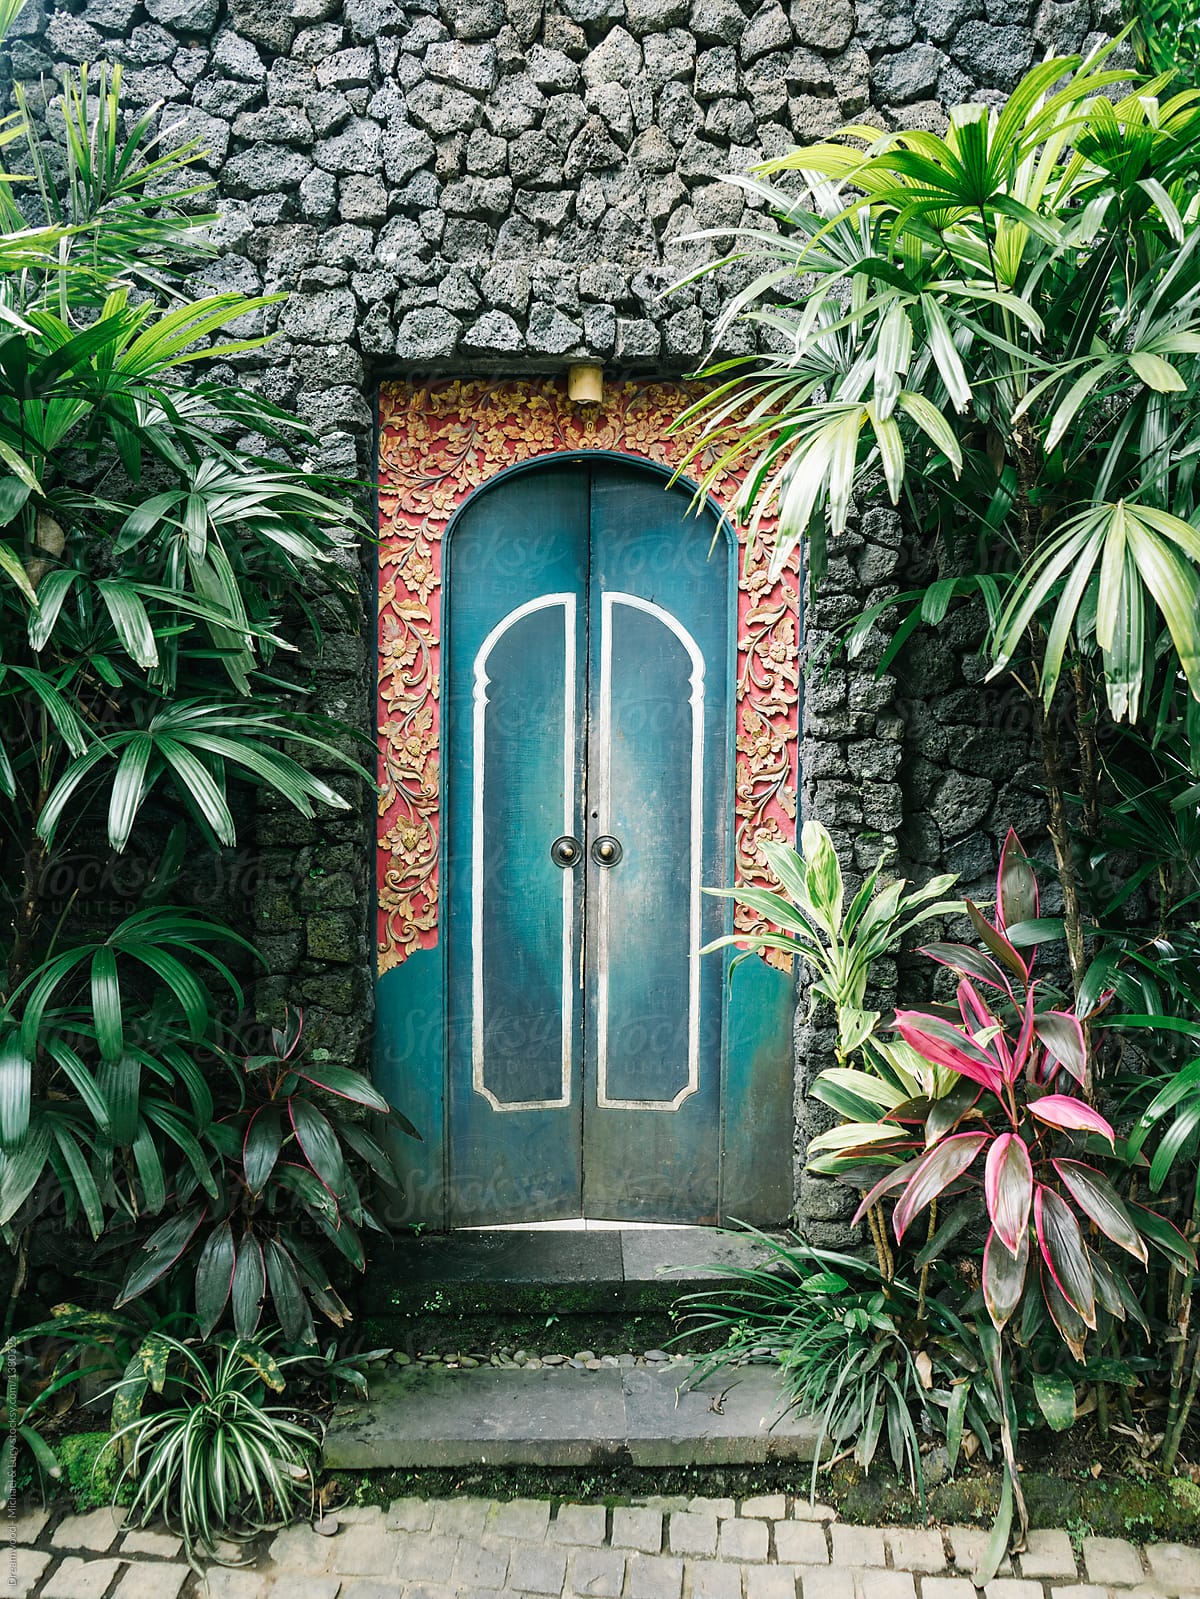 Traditional wooden door on the island of Bali